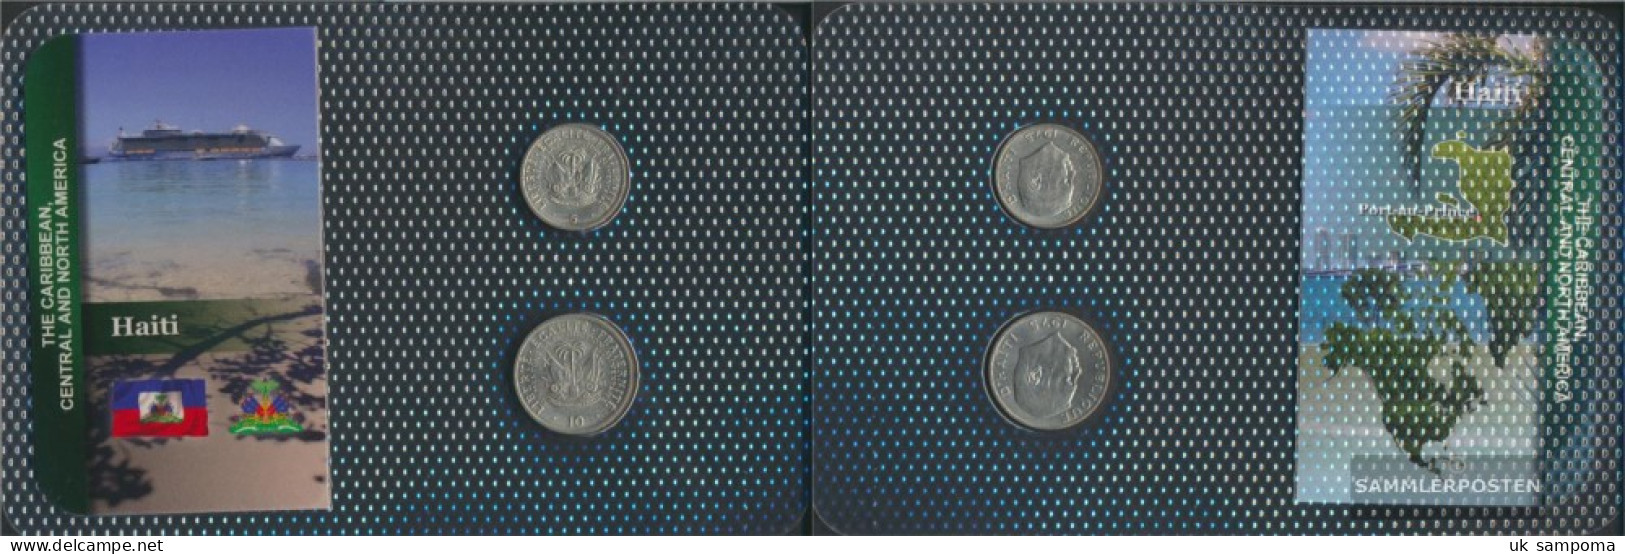 Haiti 1975 Stgl./unzirkuliert Kursmünzen Stgl./unzirkuliert 1975 5 Centimes Until 10 Centimes - Haití